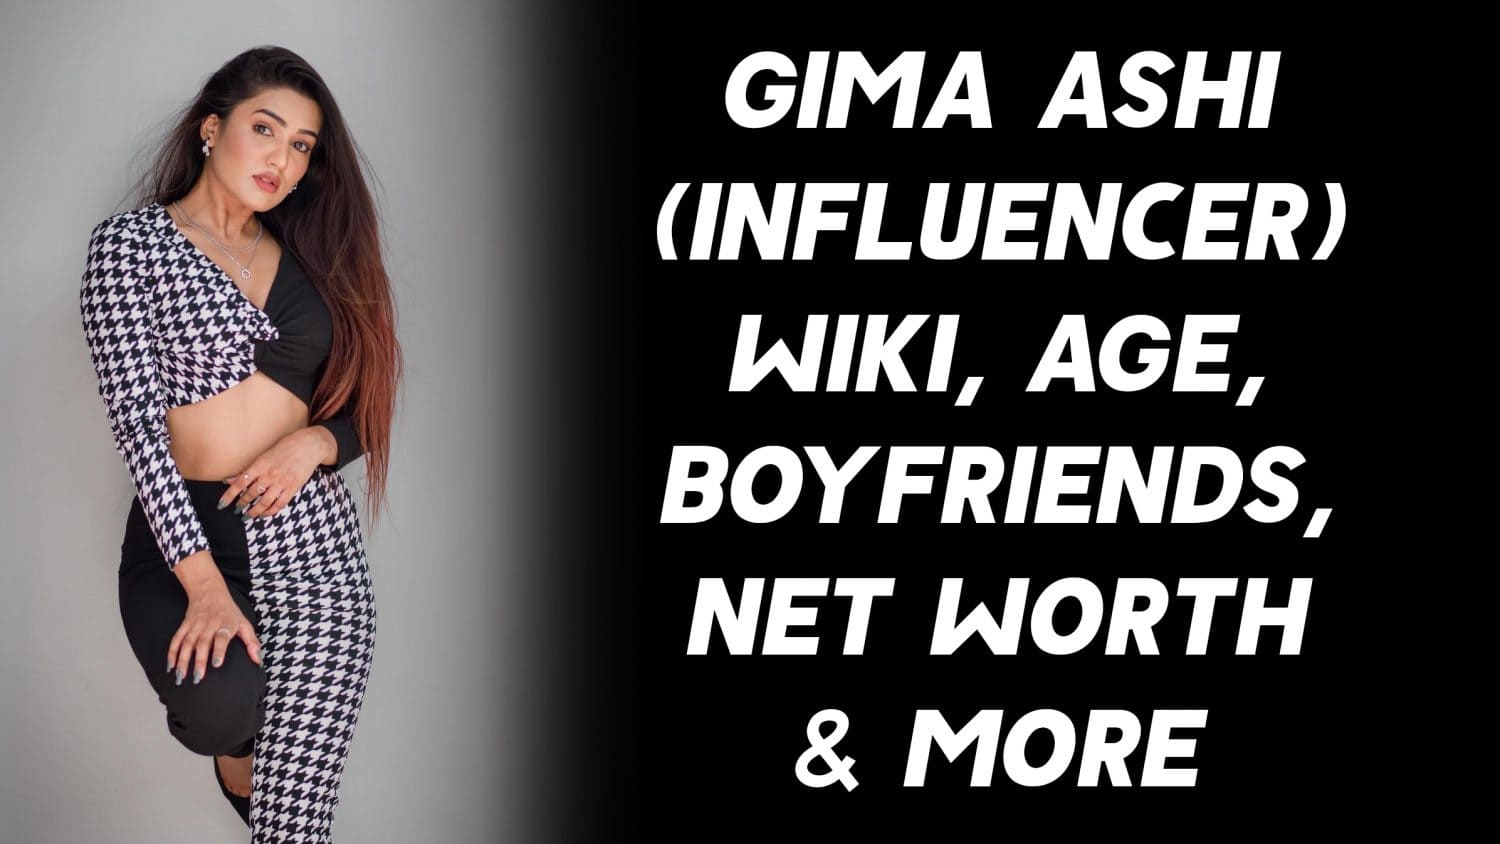 Gima Ashi (Influencer) Wiki, Age, Boyfriends, Net Worth & More 1